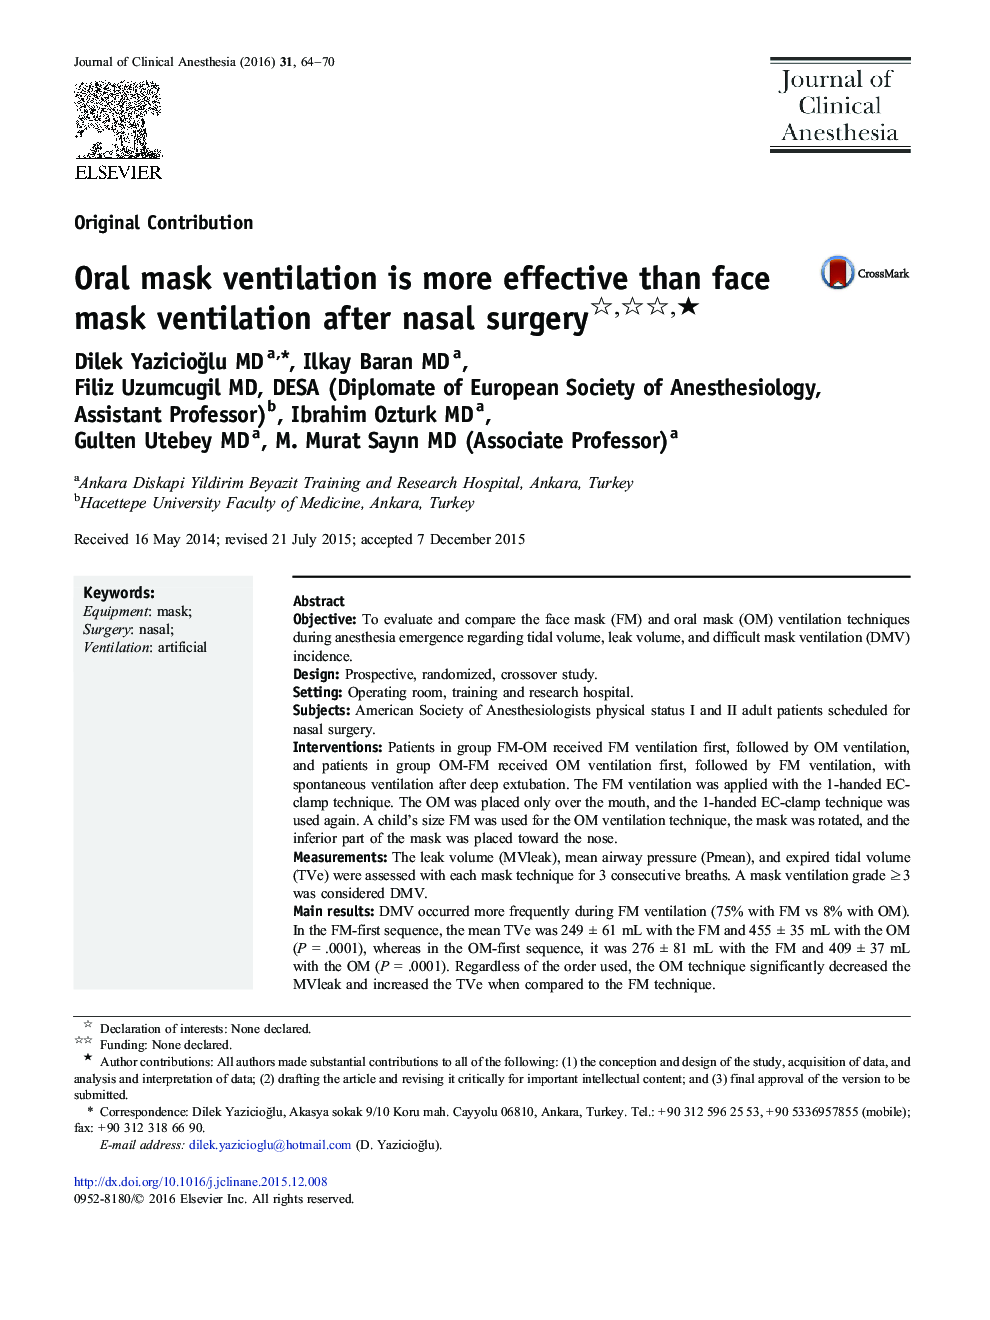 Original ContributionOral mask ventilation is more effective than face mask ventilation after nasal surgeryâ